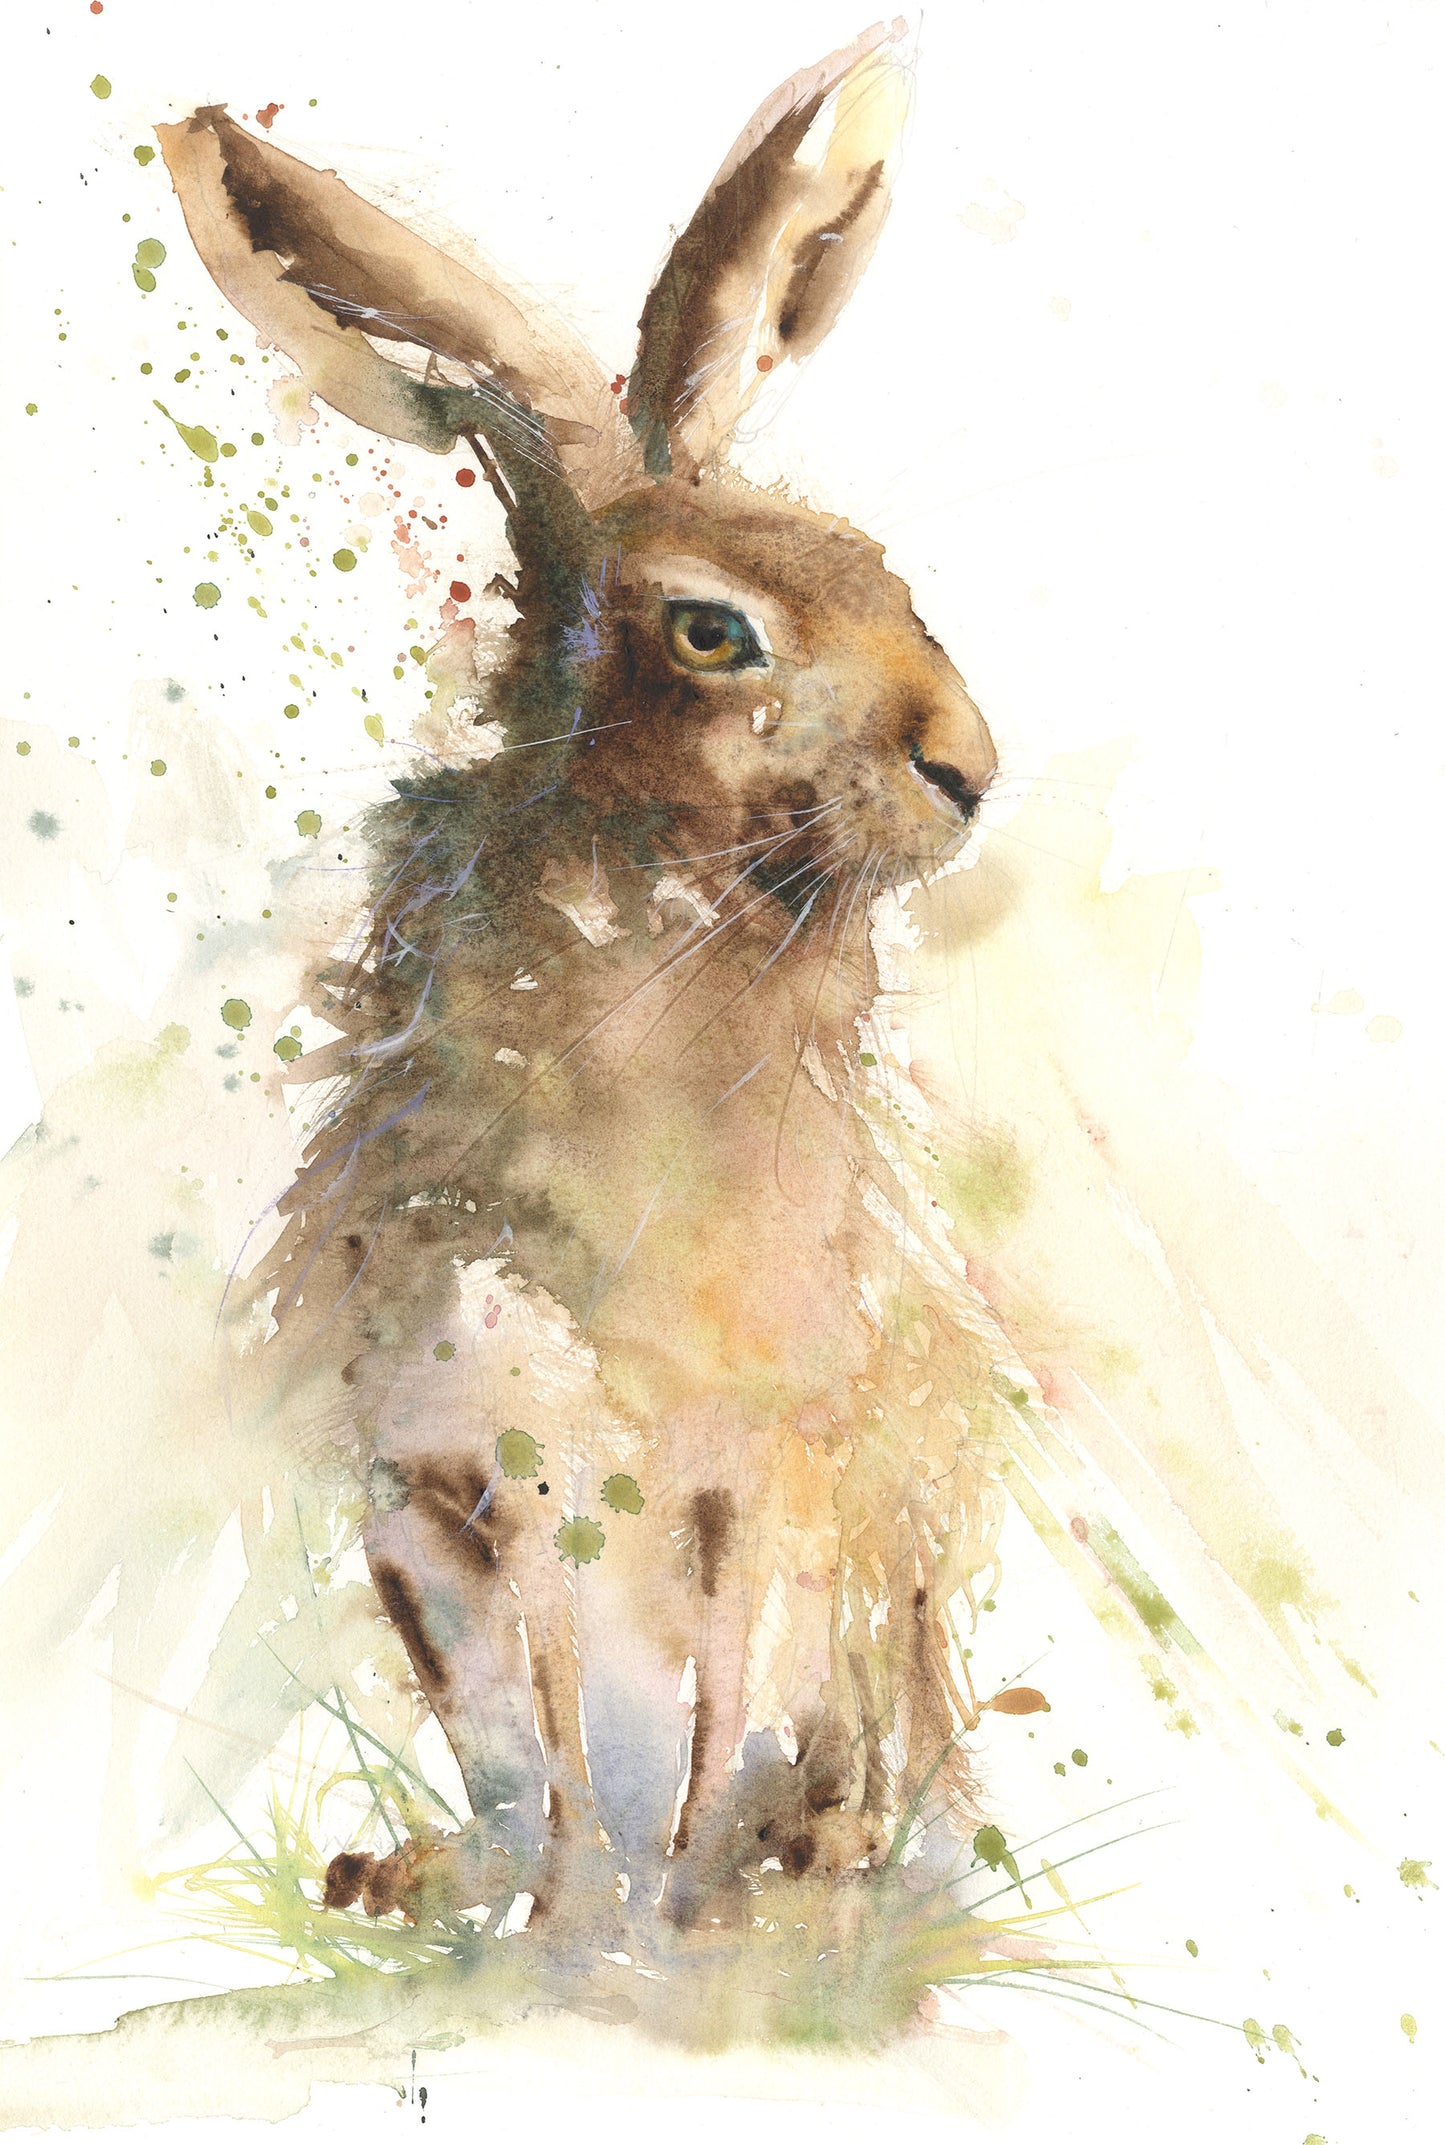 Original hare watercolour painting "Archie"